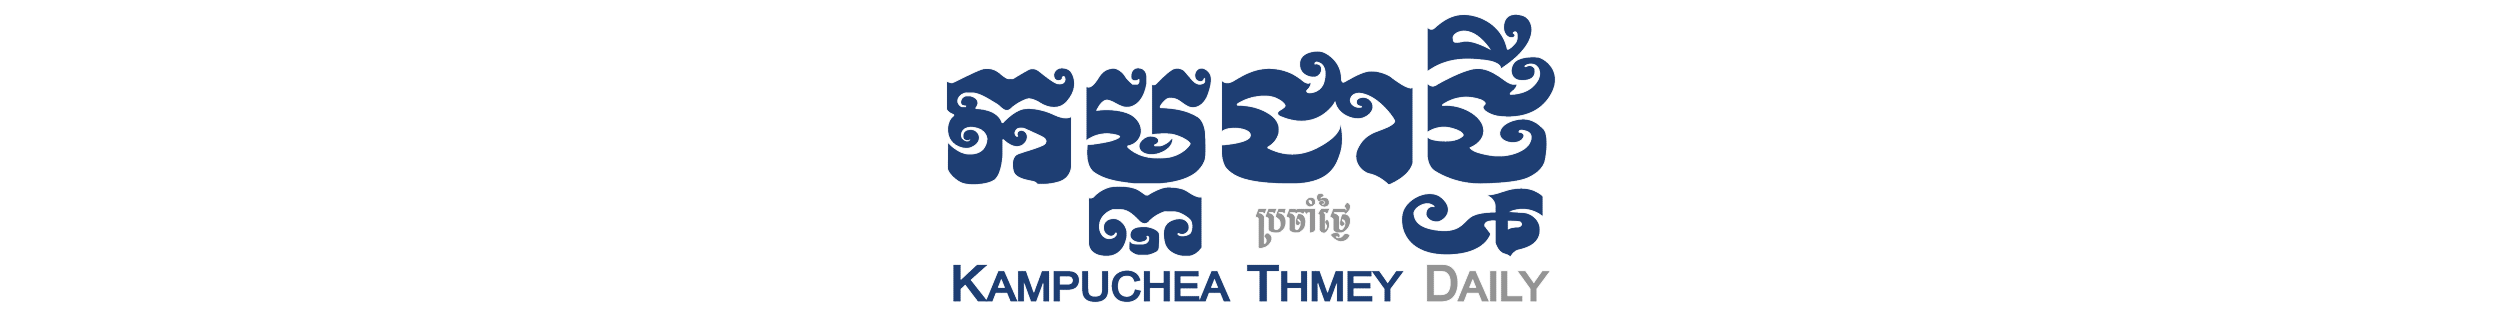 Kampuchea Thmey Daily